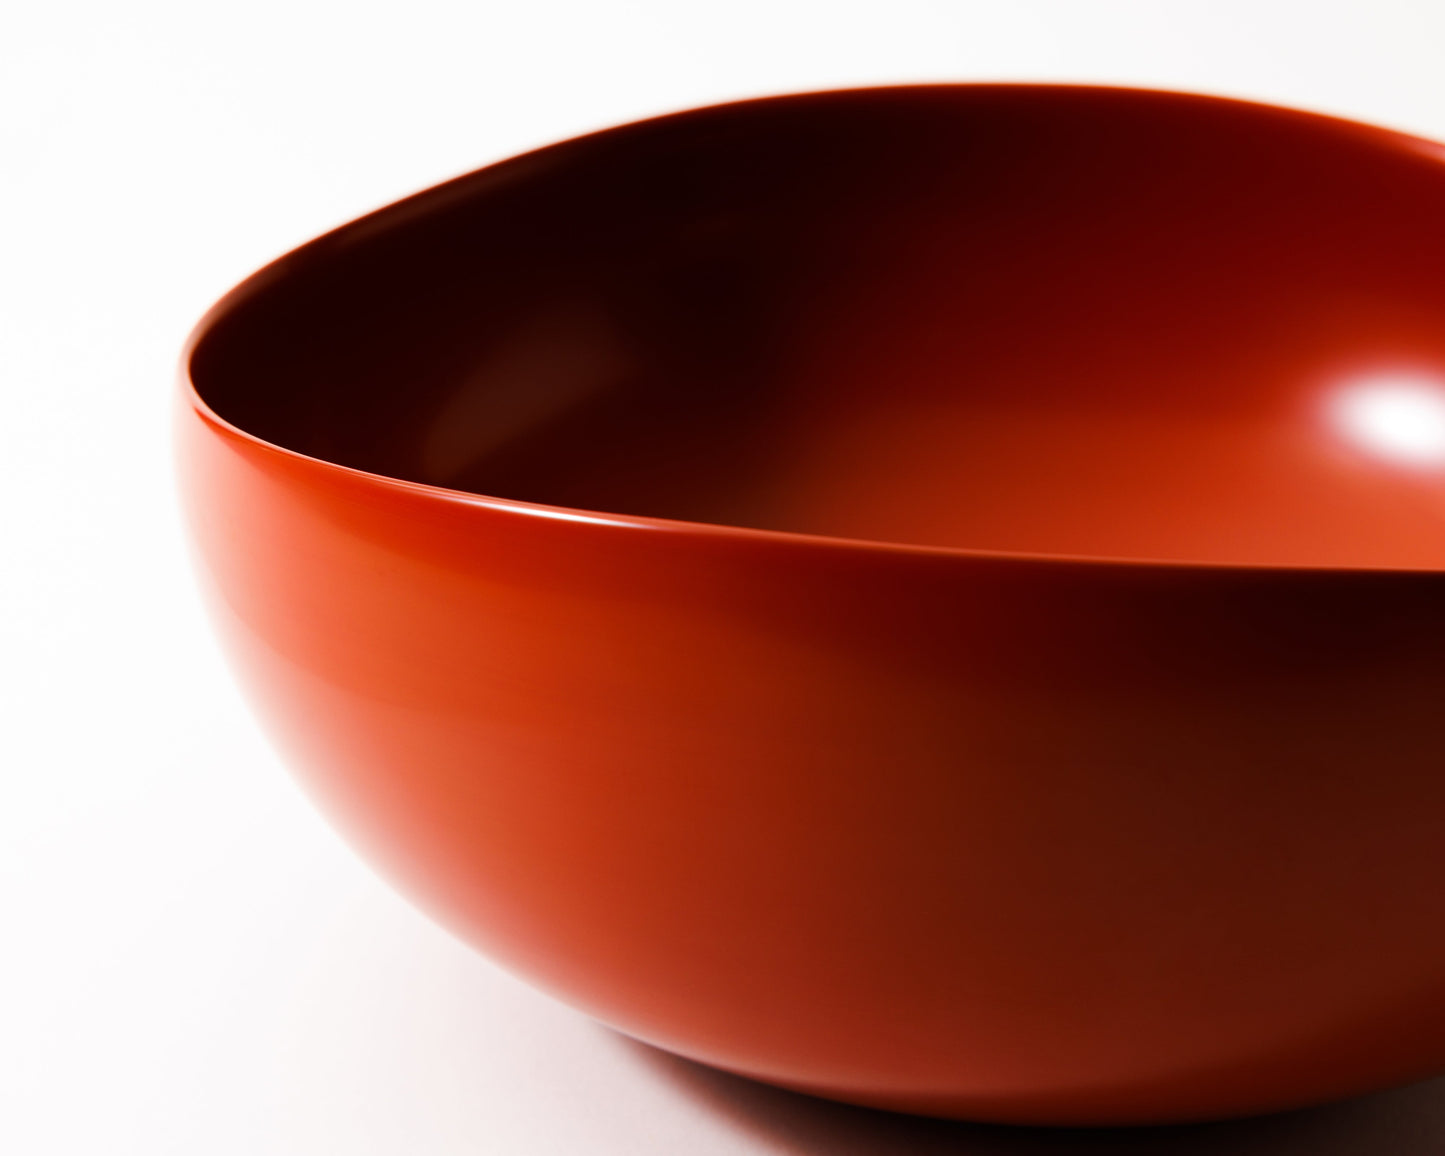 Salad bowl Yuragi (washed in red)